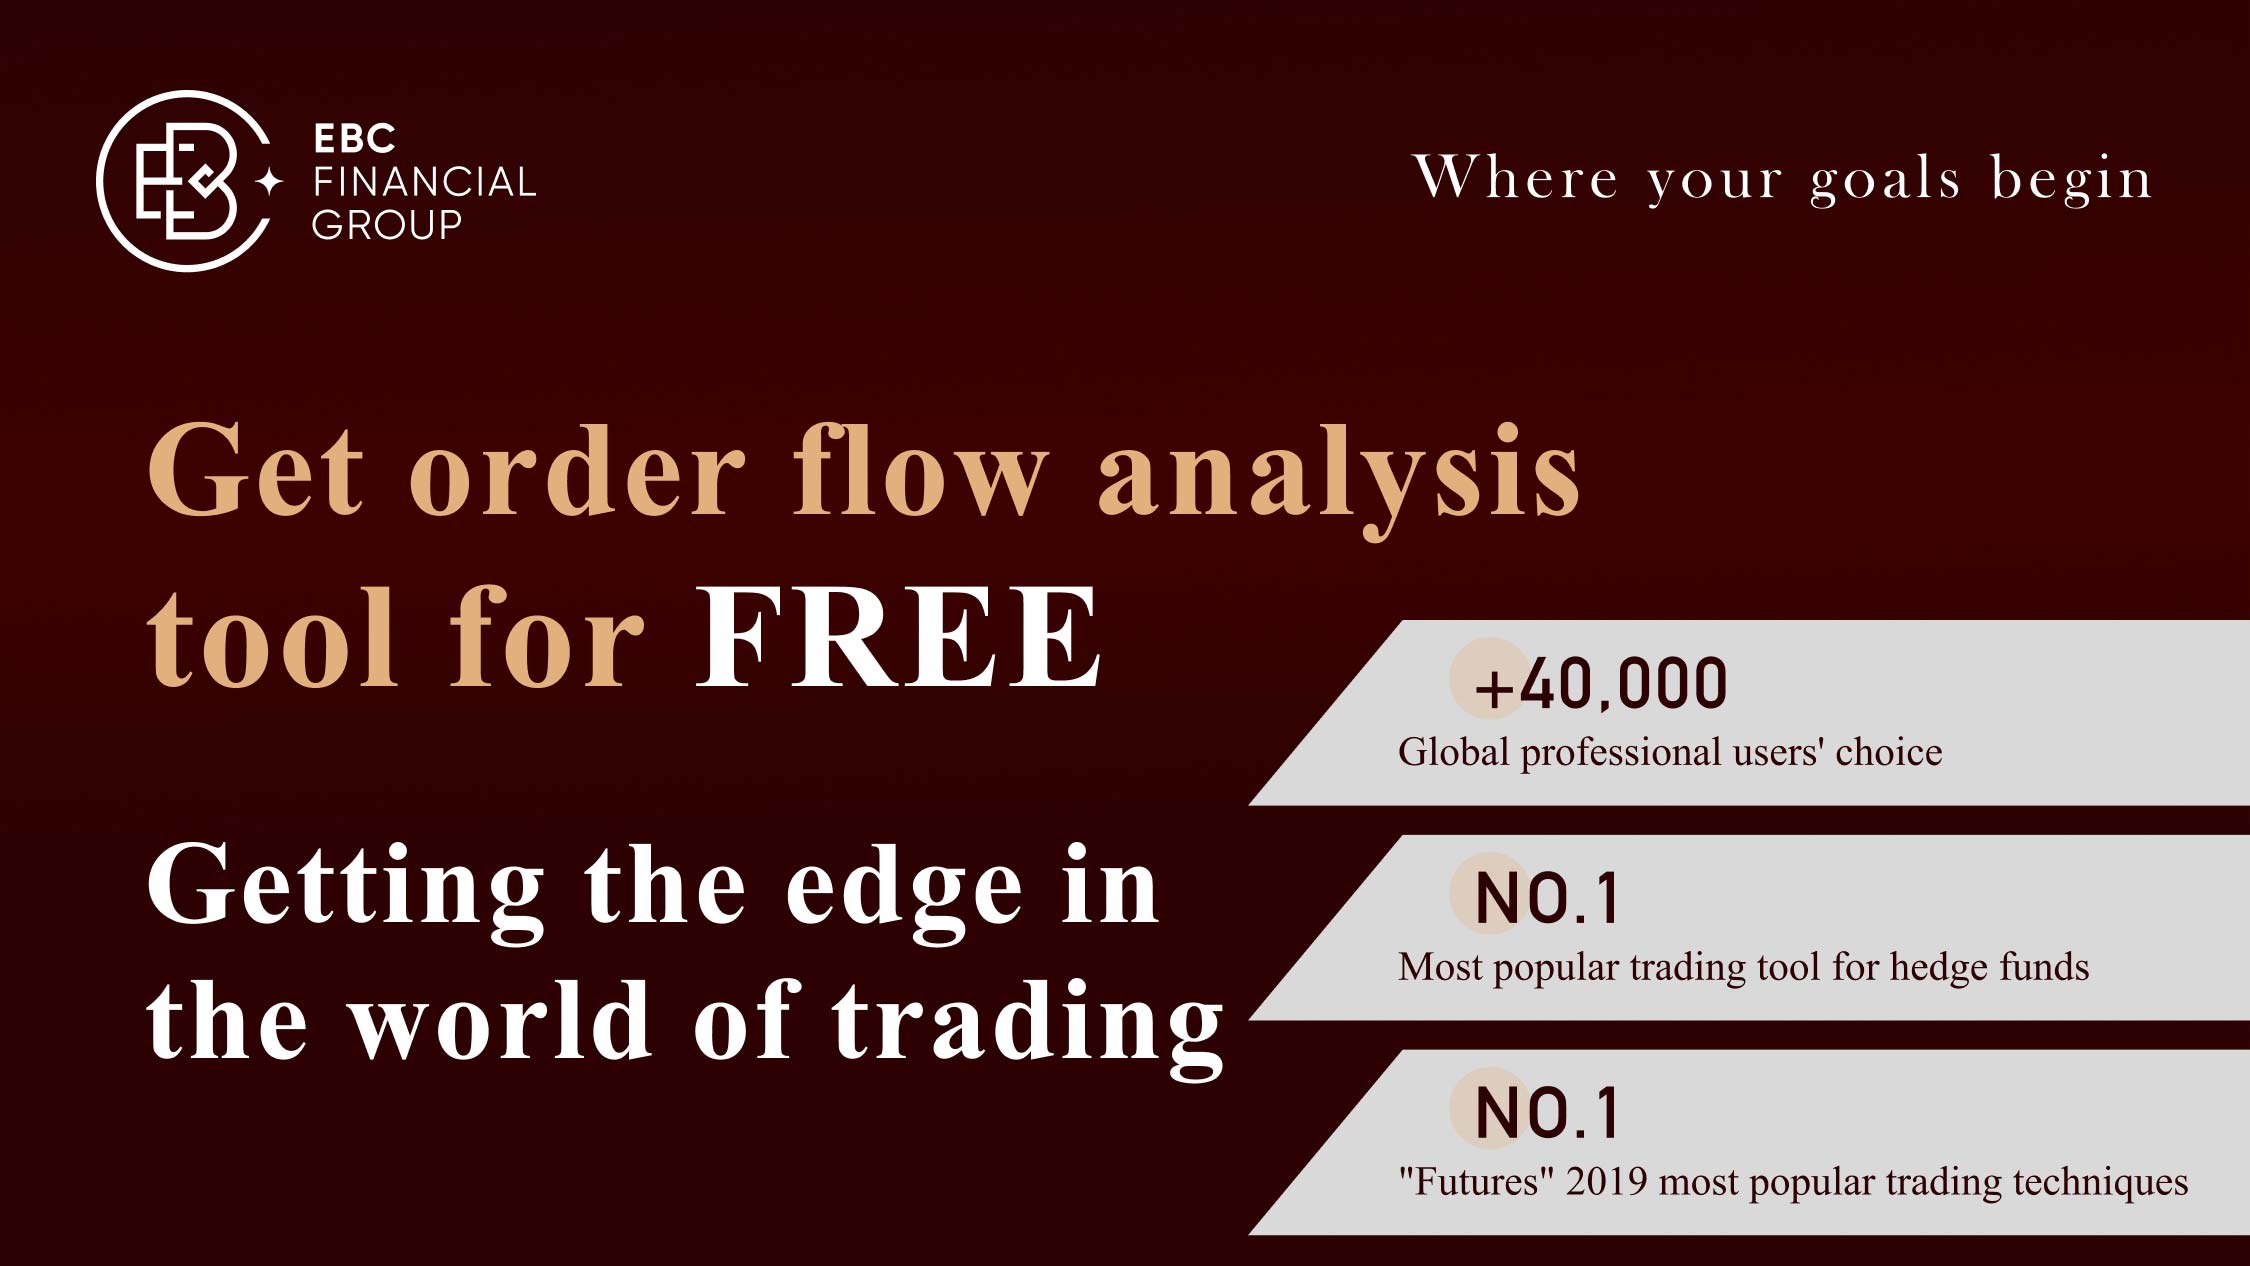 Get order flow analysis tool for FREE